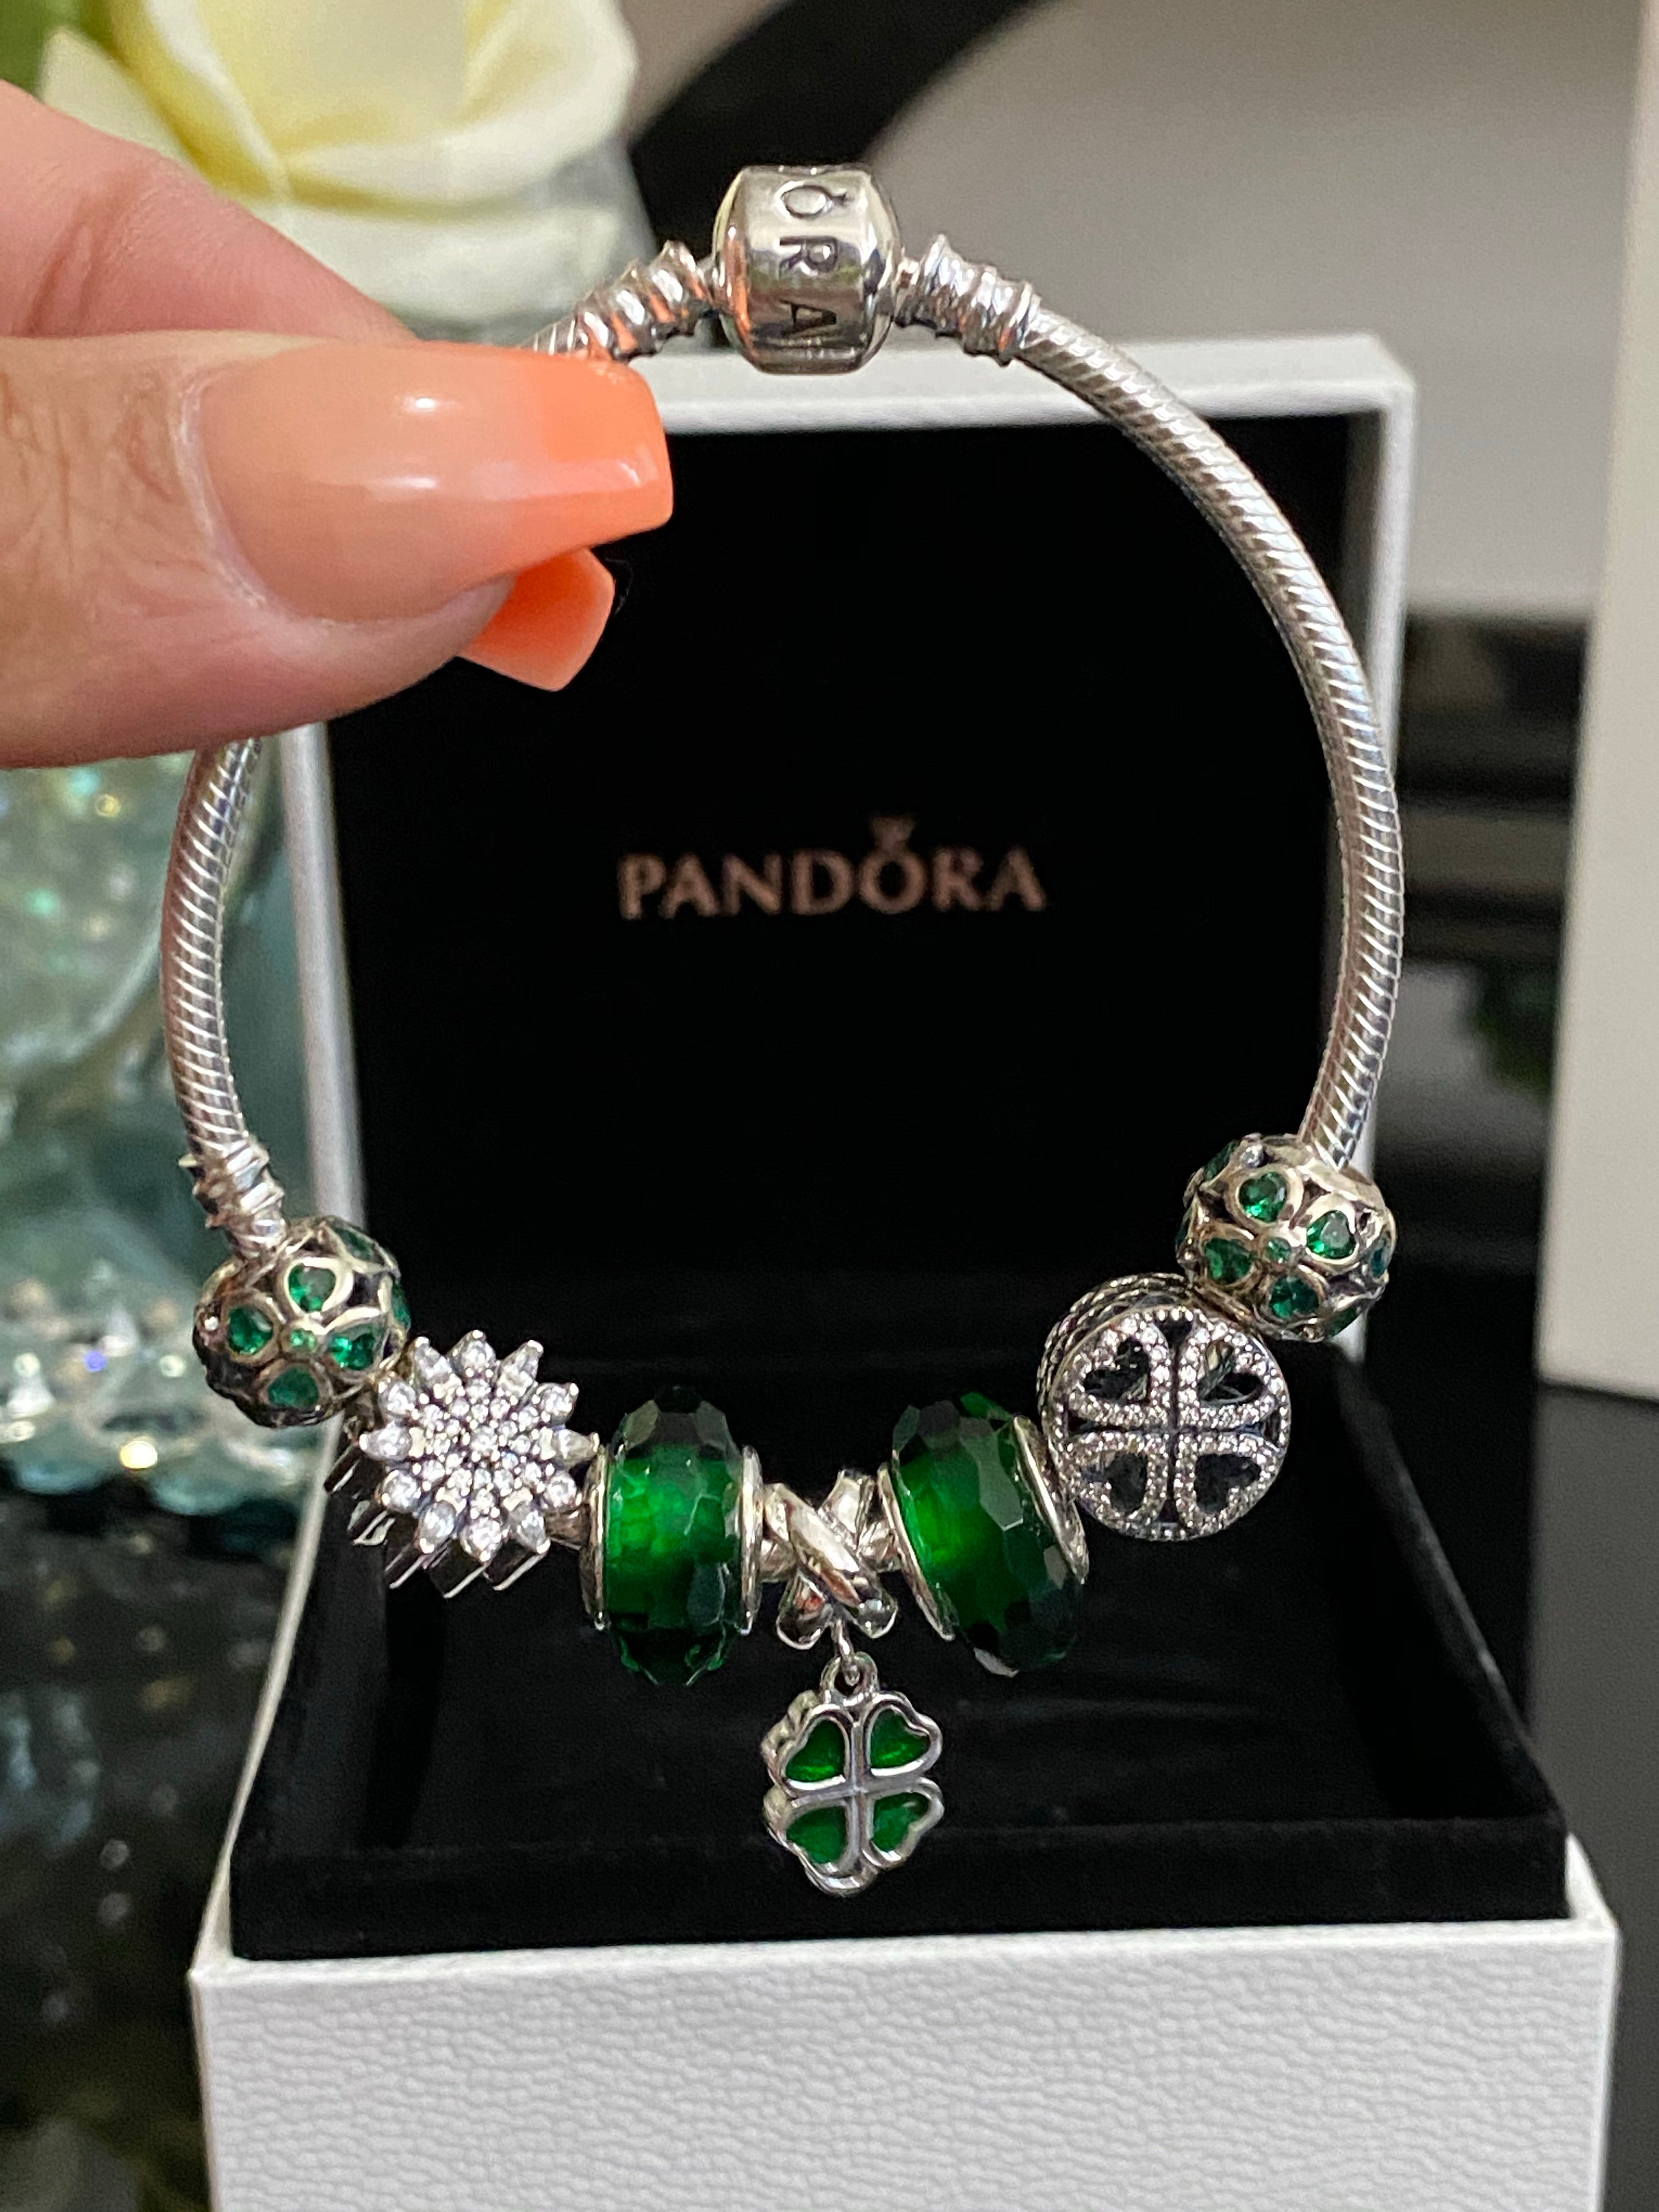 Lucky charms pandora bracelet